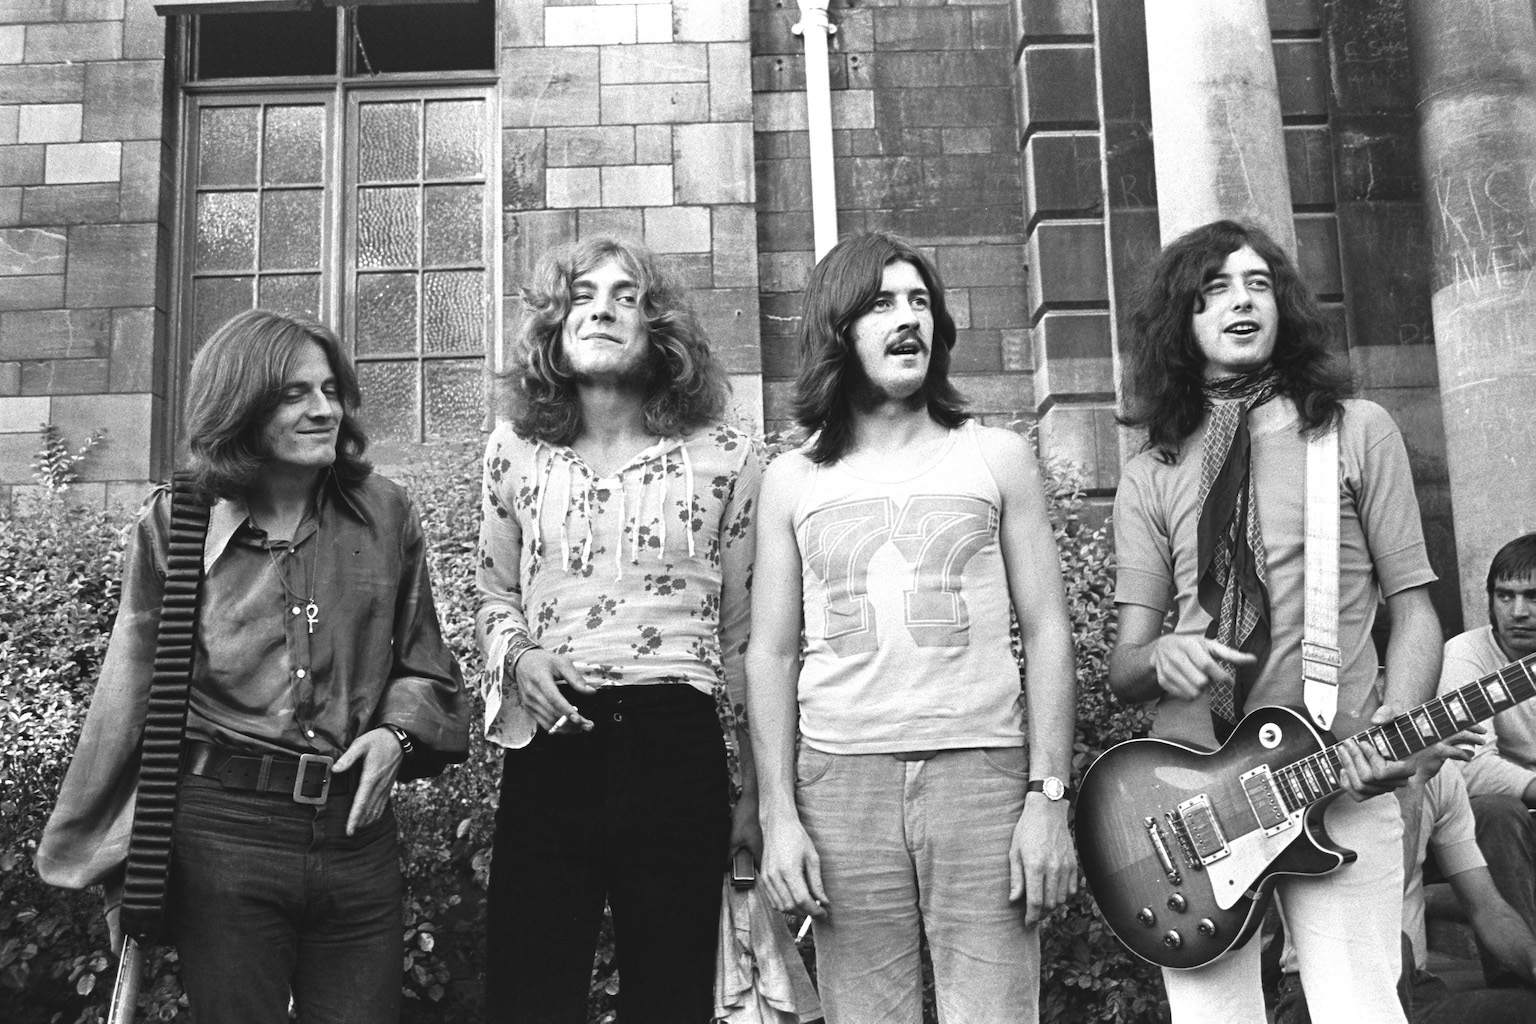 Led Zeppelin at the 1969 Bath Festival